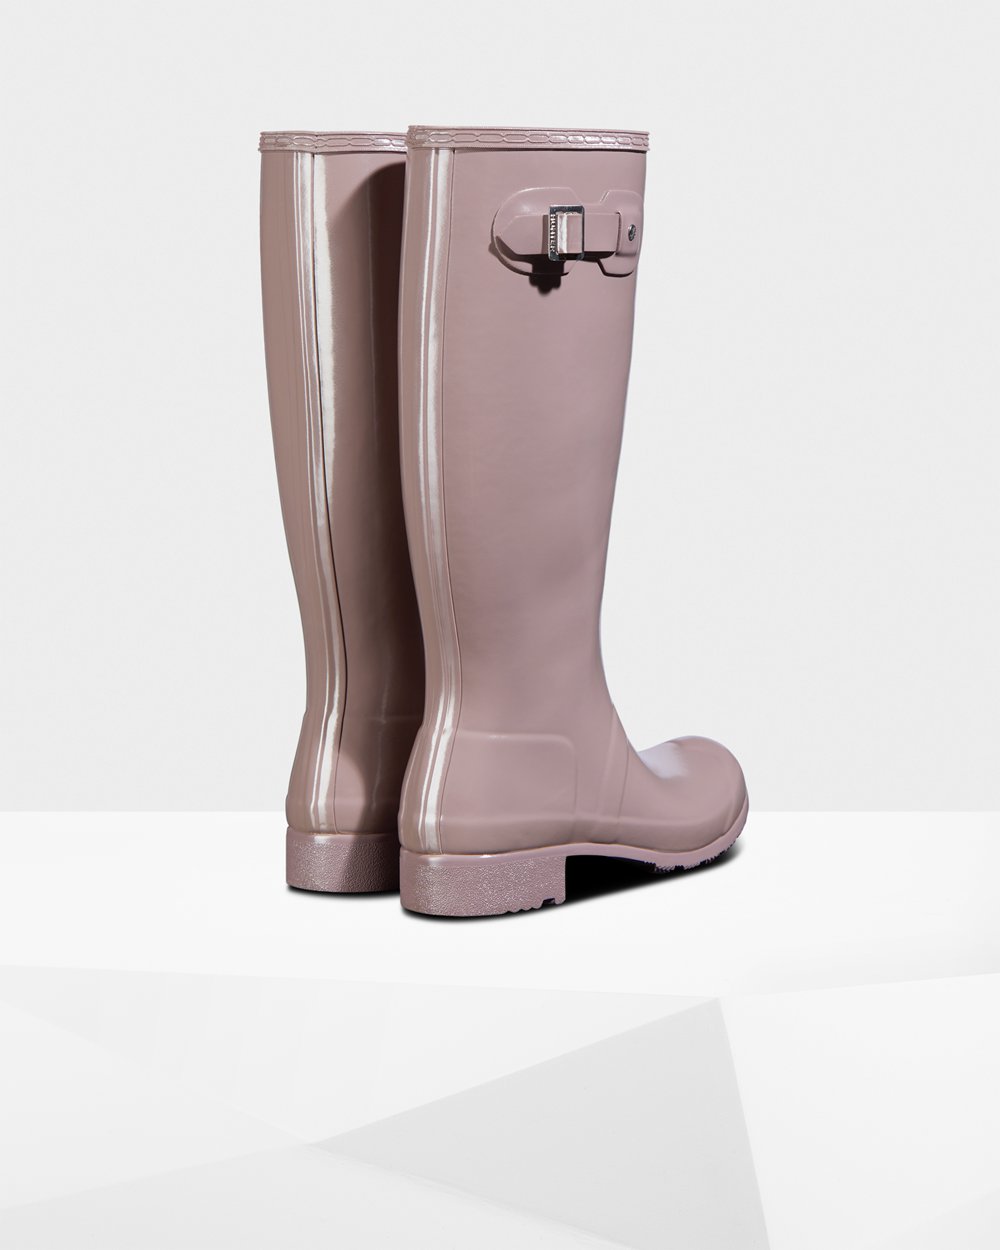 Womens Tall Rain Boots - Hunter Original Tour Foldable Gloss (94YOCLGXD) - Purple